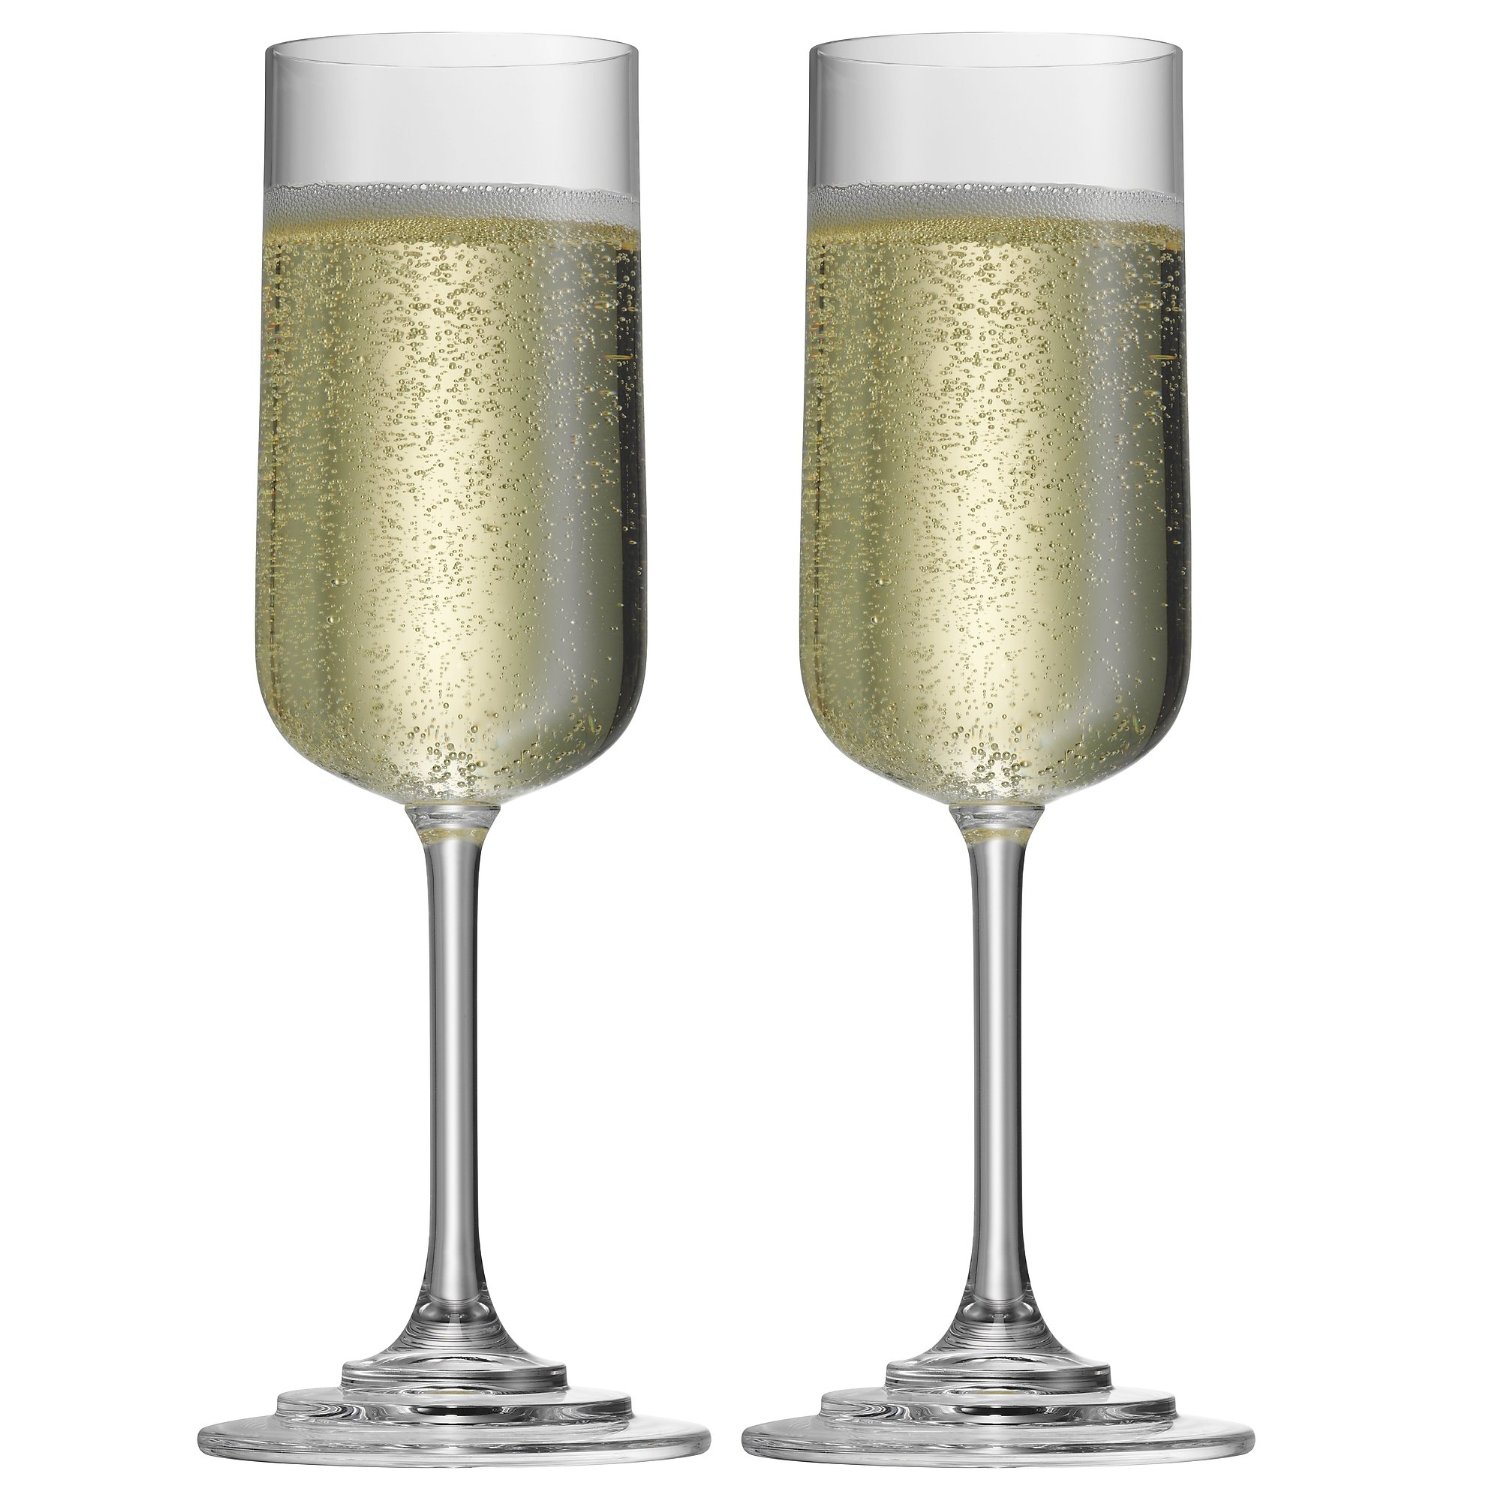 WMF MICHALSKY Champagnerglas Set 2 St. - Freisteller (2).jpg